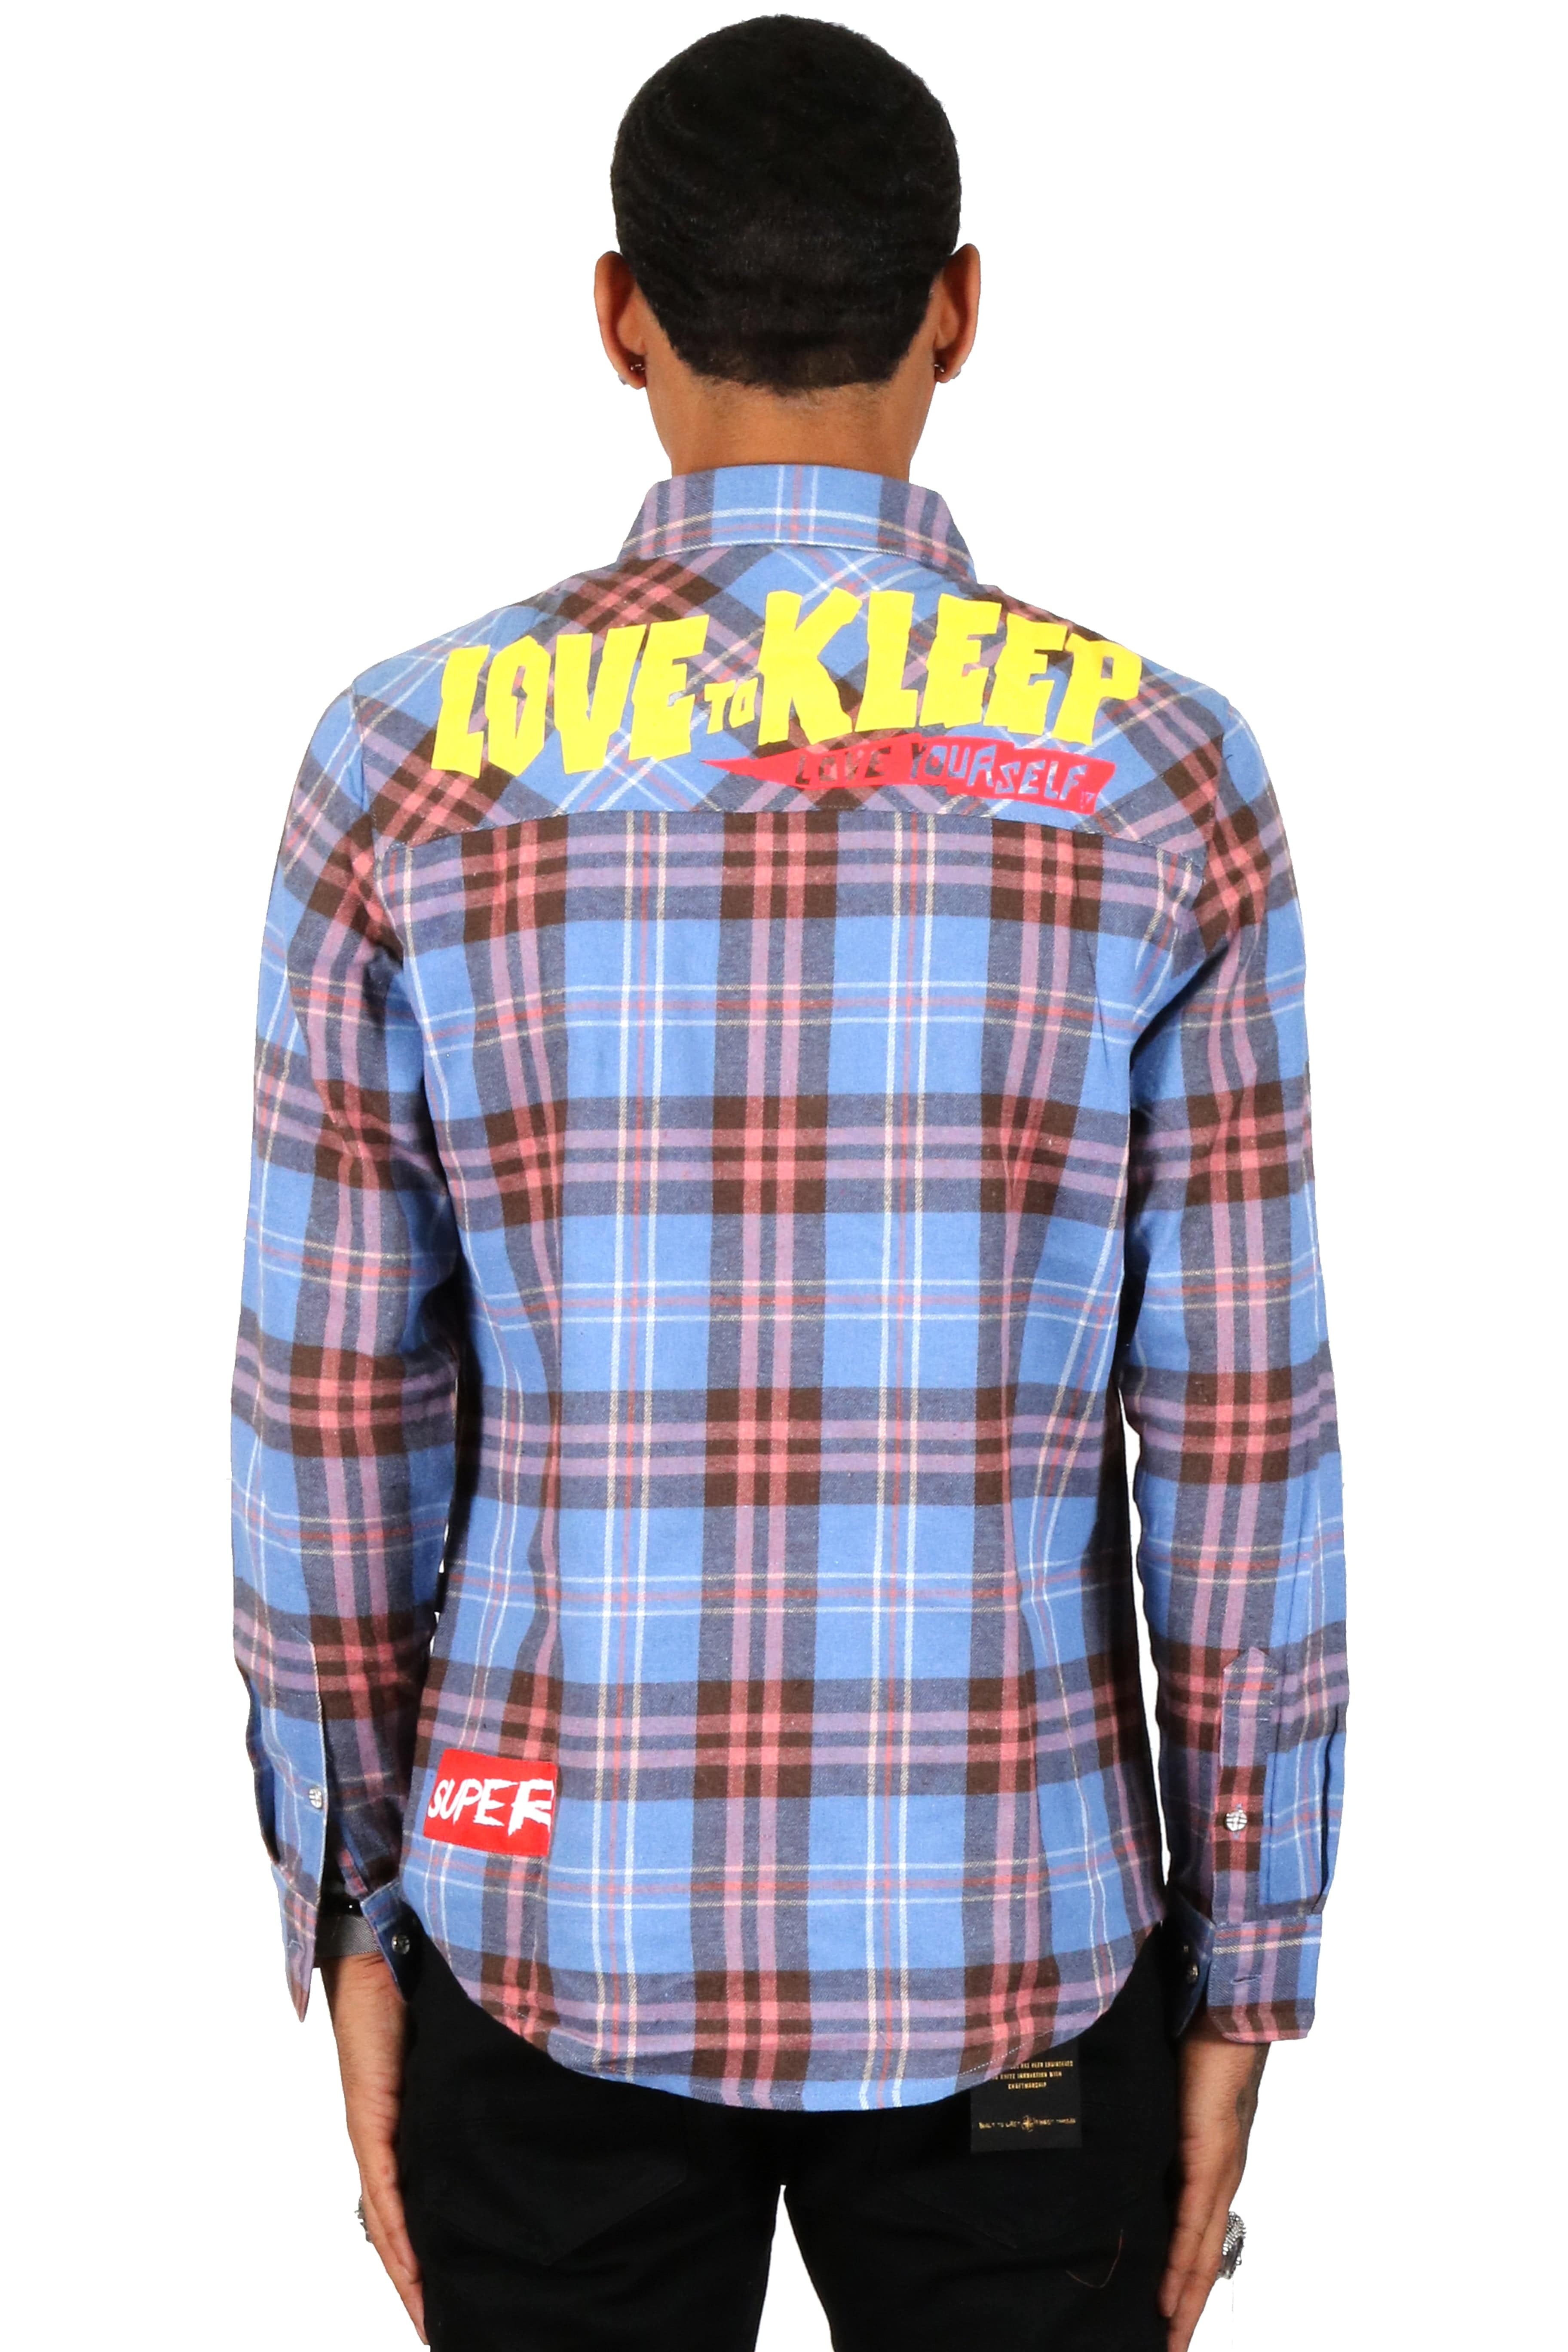 KLEEP Men's Shirt WENGE Men's premium flannel button down shirt